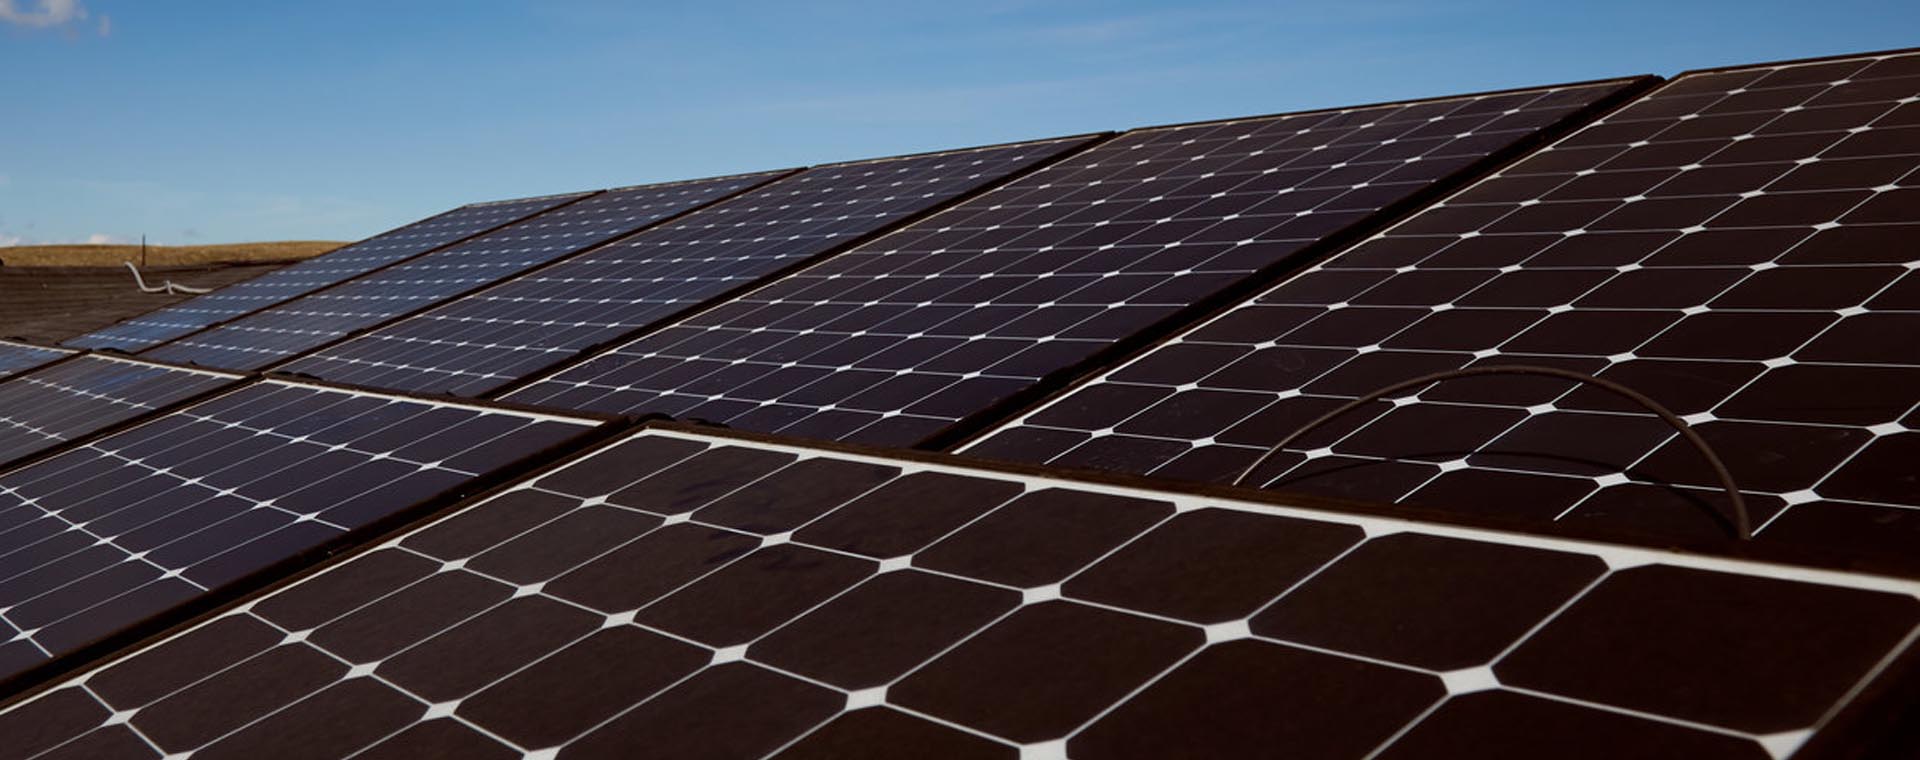 Solar Panel Manufacturers in Coimbatore